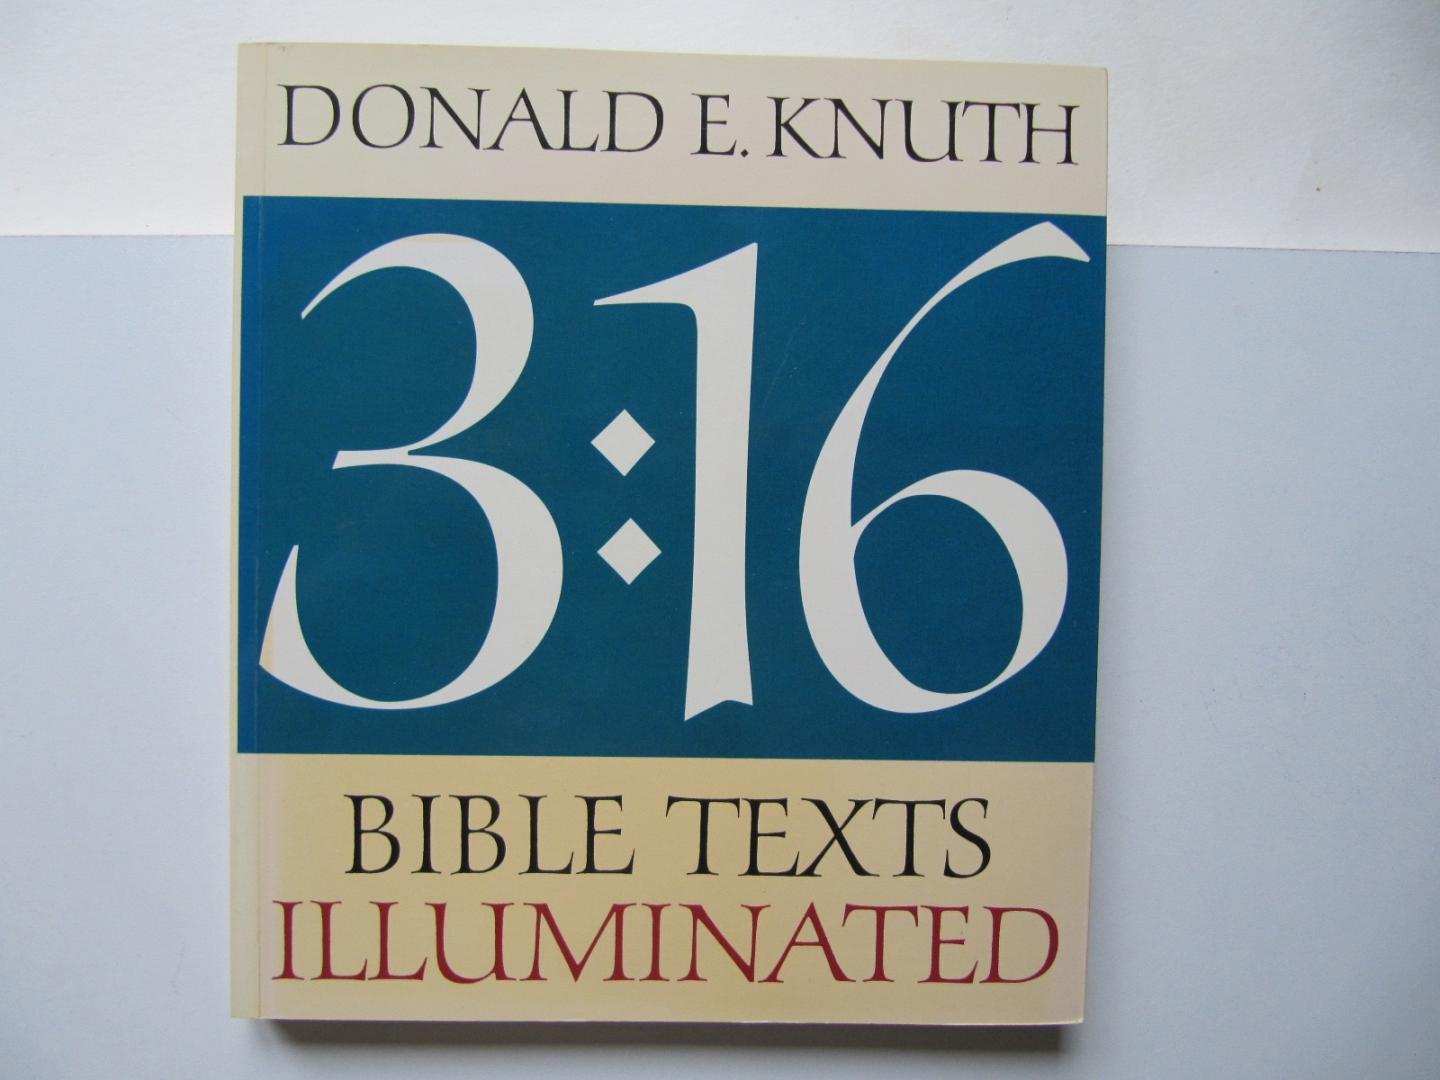 Donald E. Knuth - 3:16 Bible Texts Illuminated